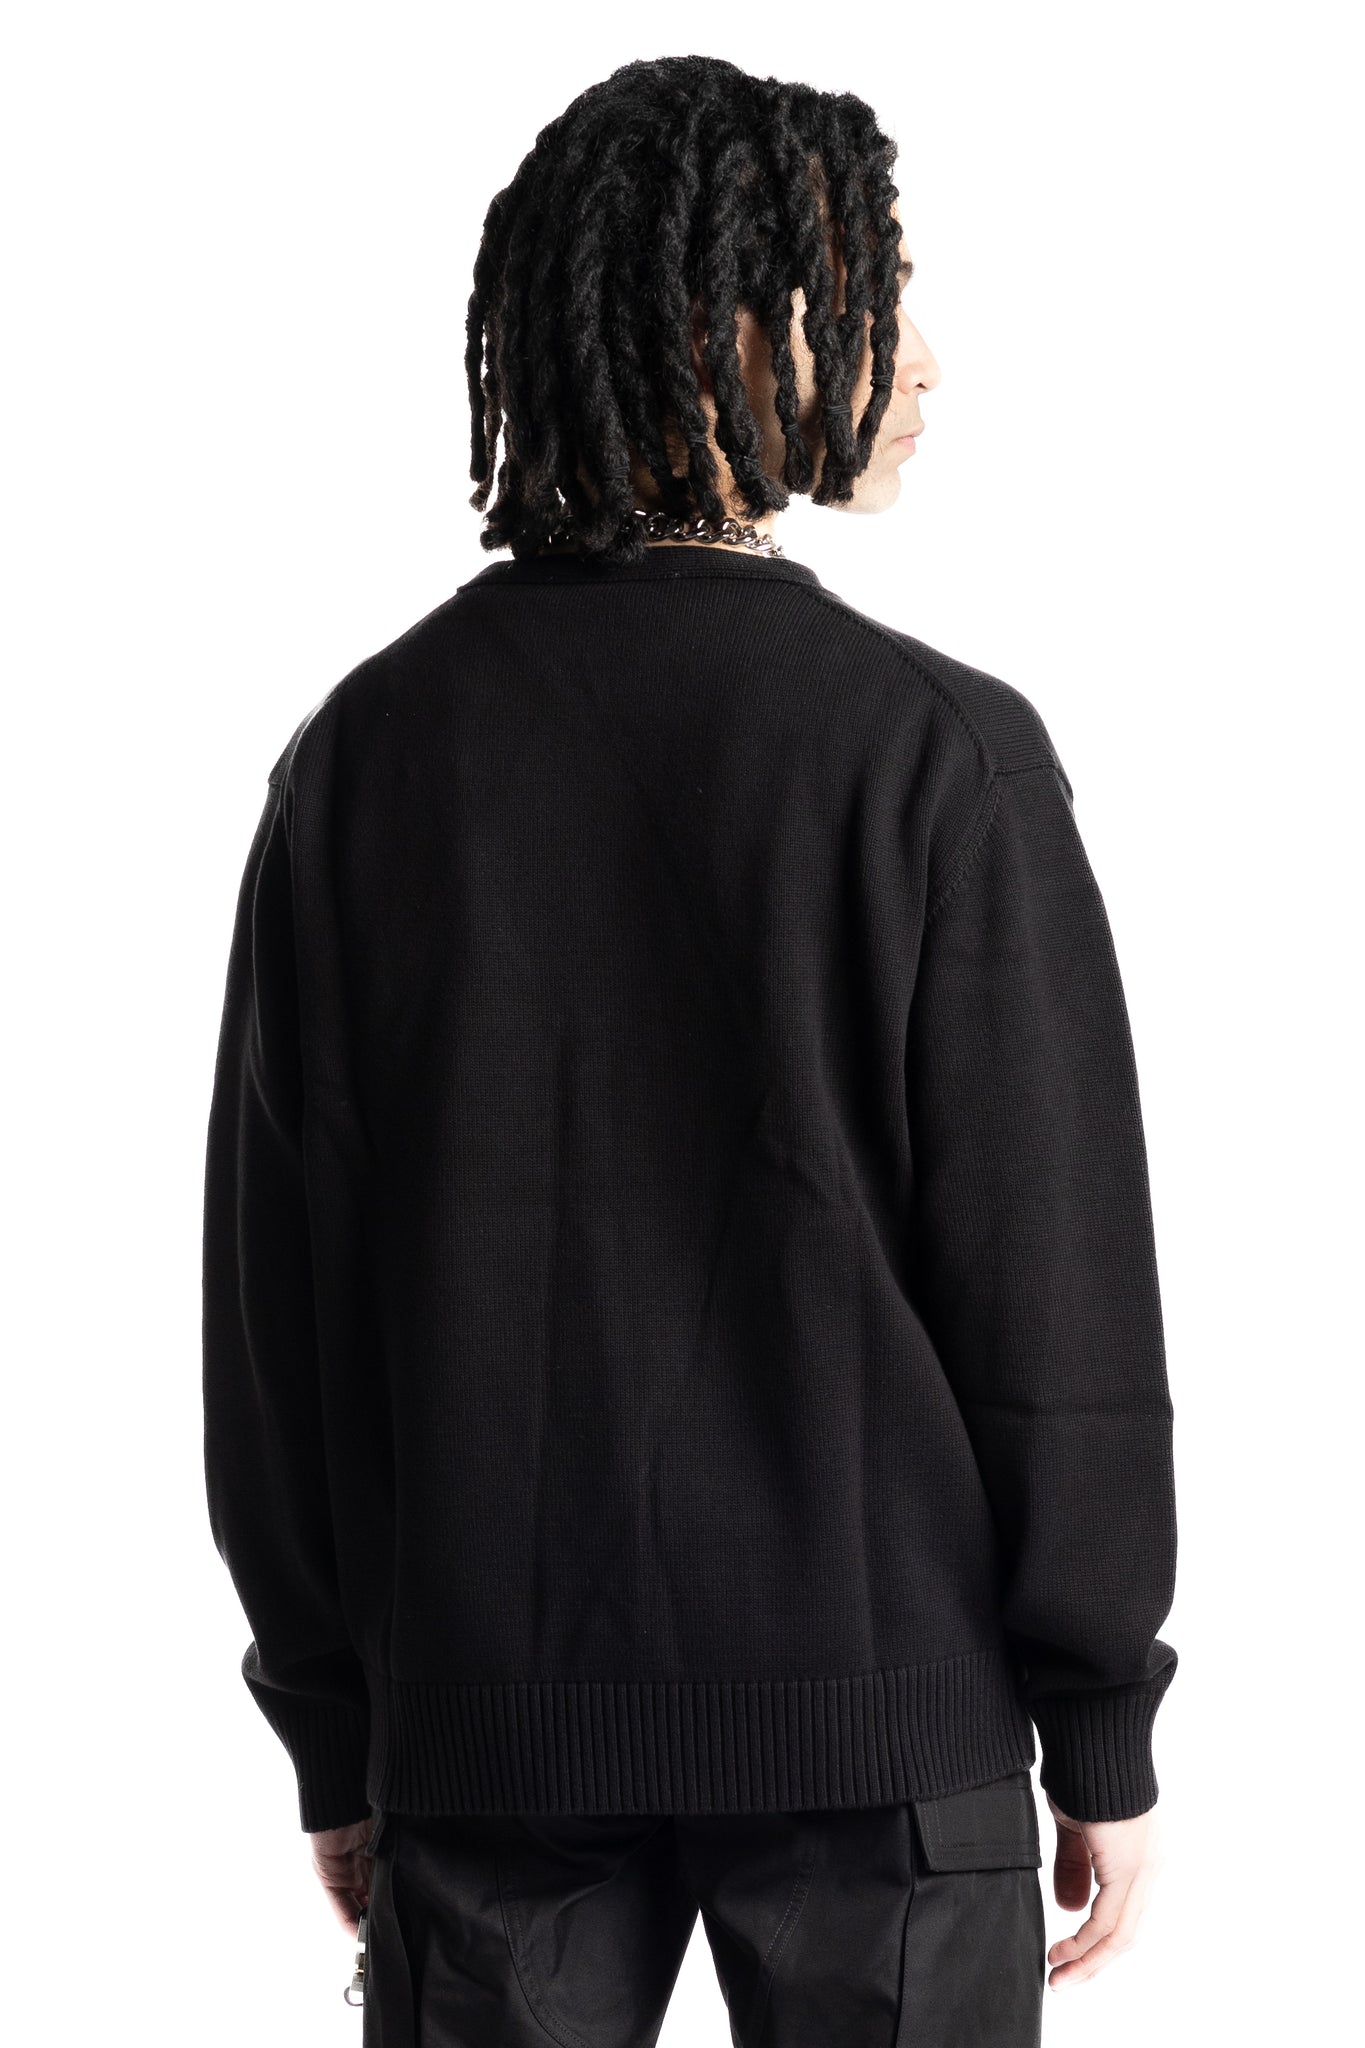 1017 ALYX 9SM Graphic Crewneck Sweater Black